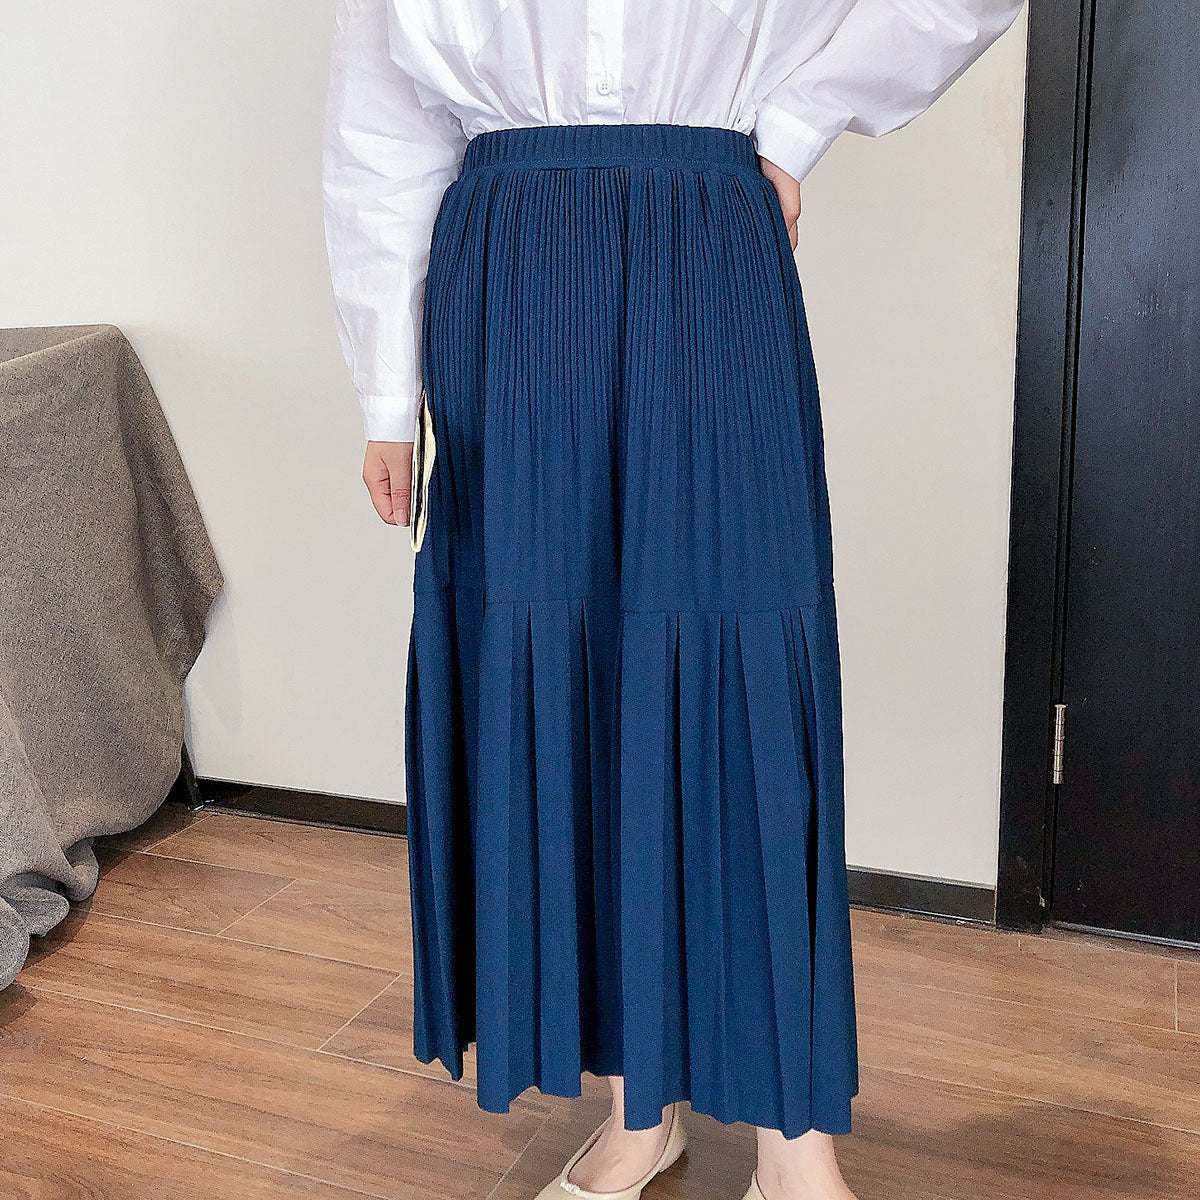 Li Zhiqi Pleated Hair Skirt Female Spring and Autumn New Middle School Han Korean High Wall Skisk Fashion A Skirt 11113